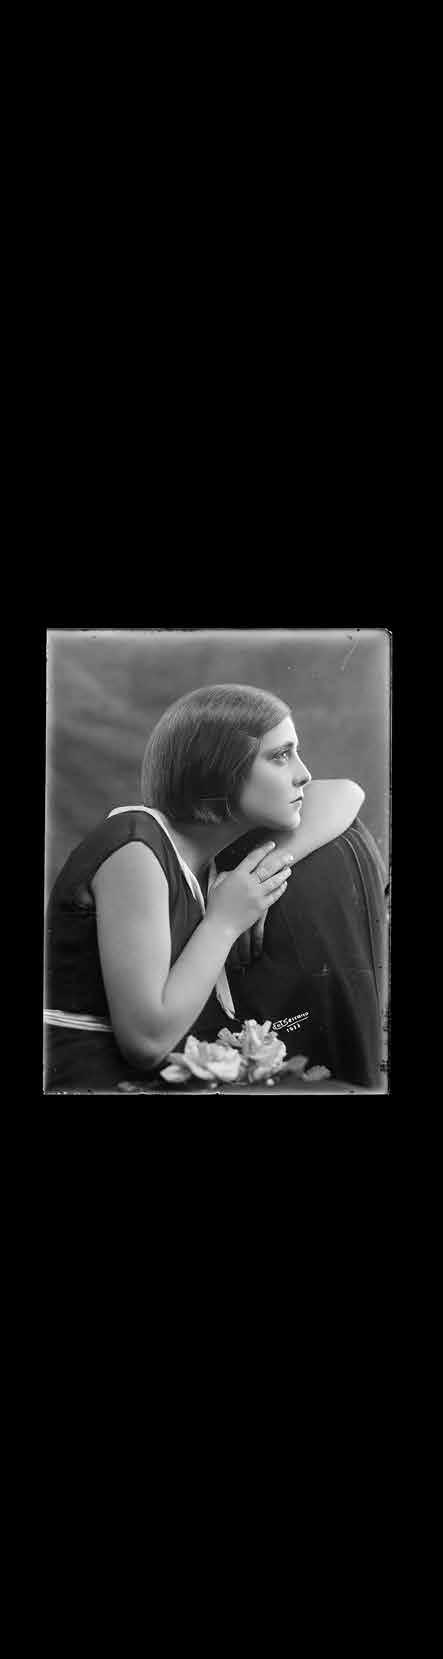 76 77 Retrato de mujer no identificada. 1933 12.07 x 9.